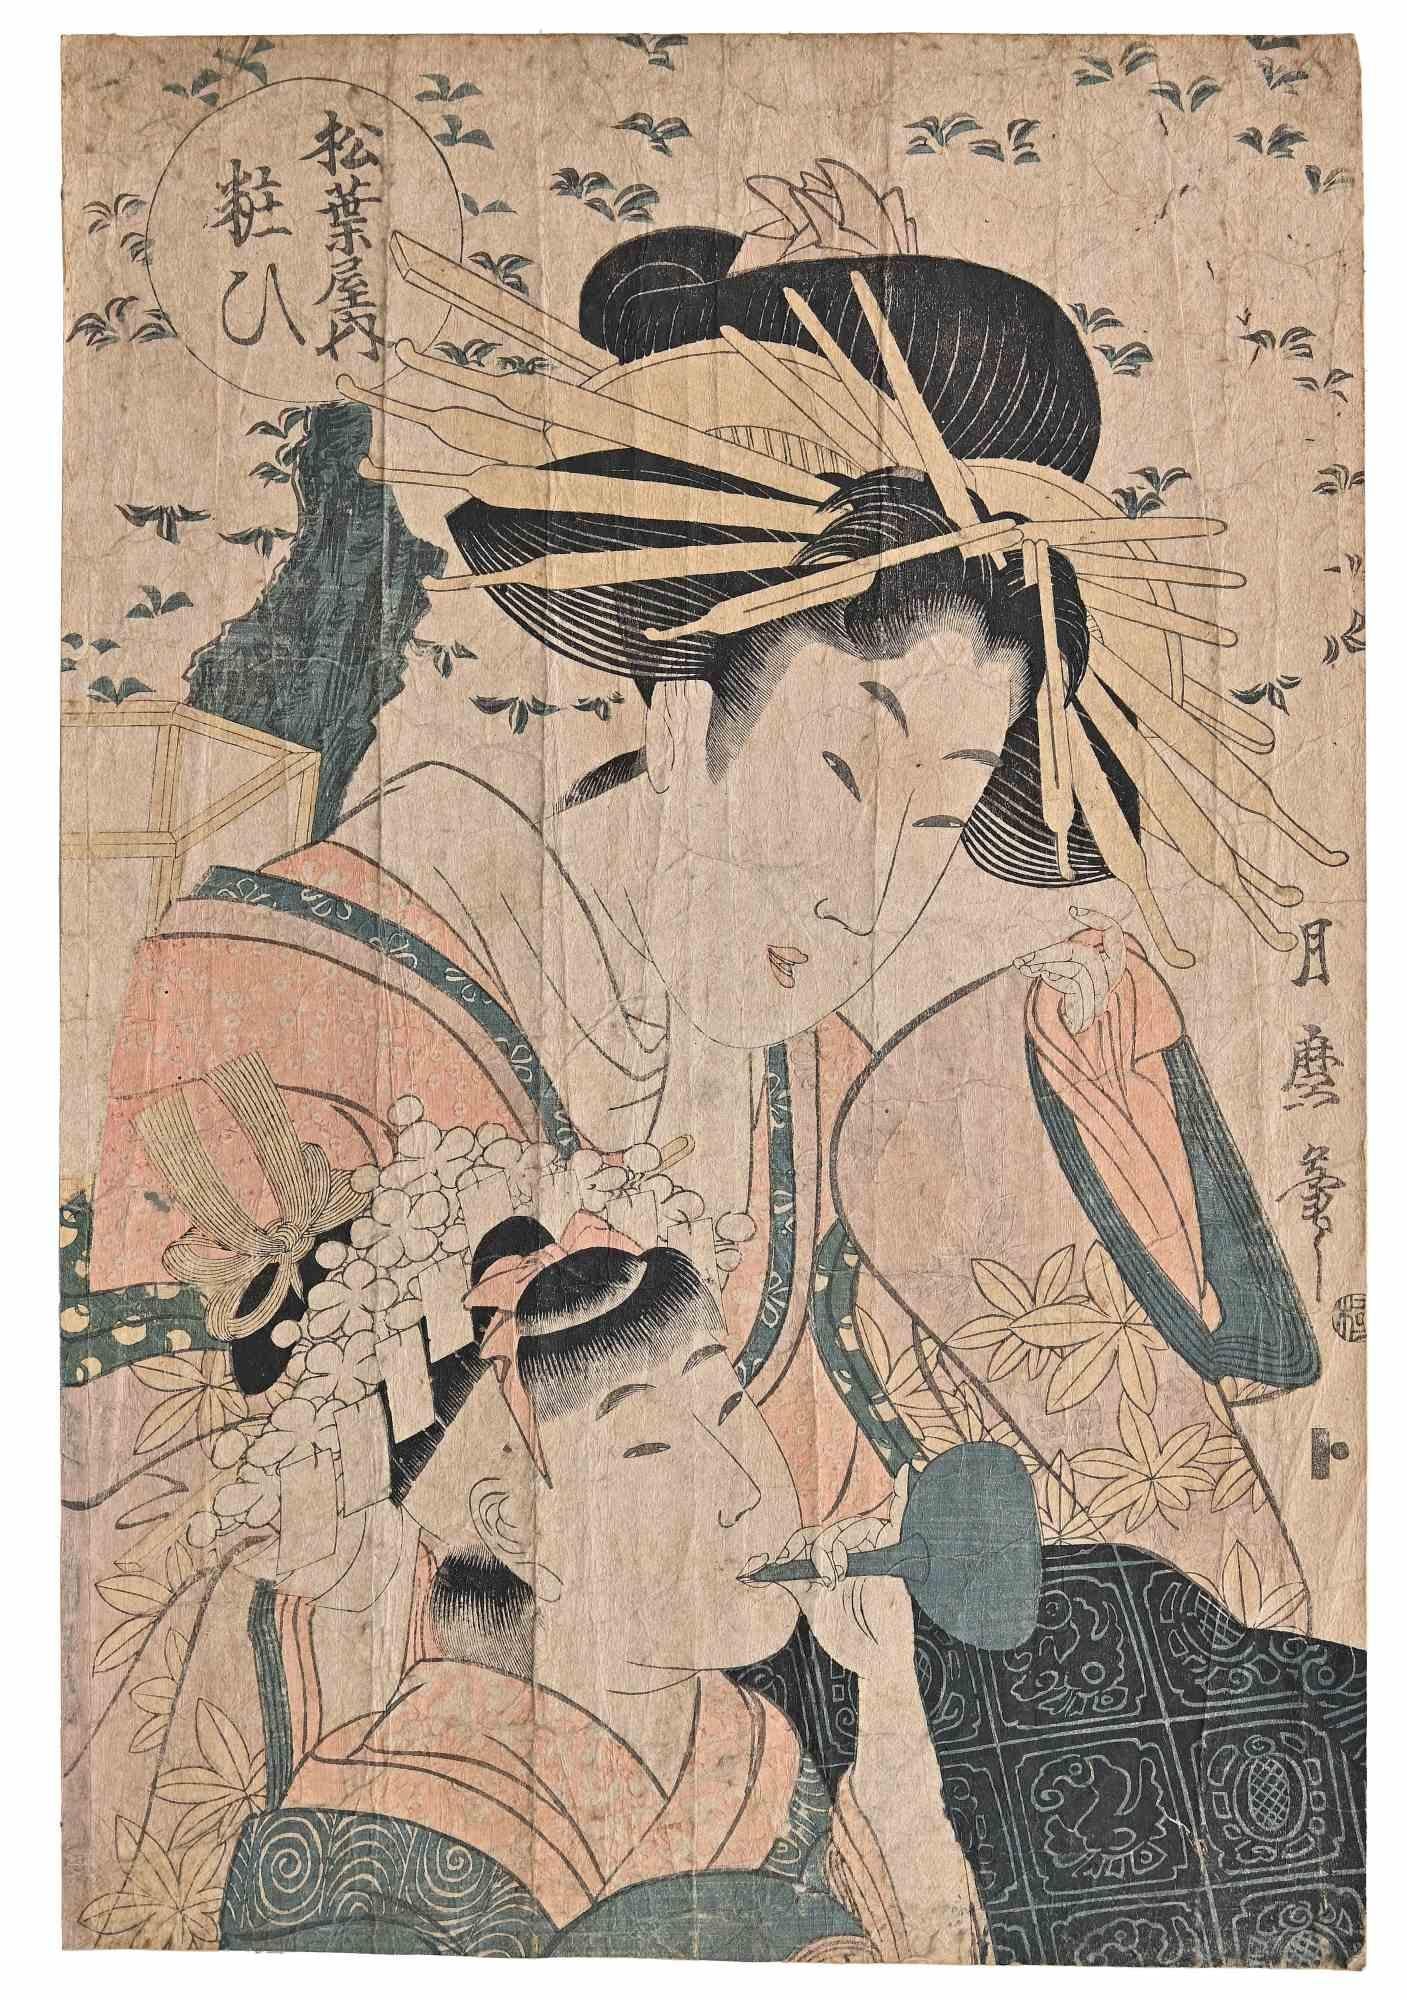 Matsubaya -  Woodblock Print by Utagawa Kuniyoshi - Mid-19th Cent.